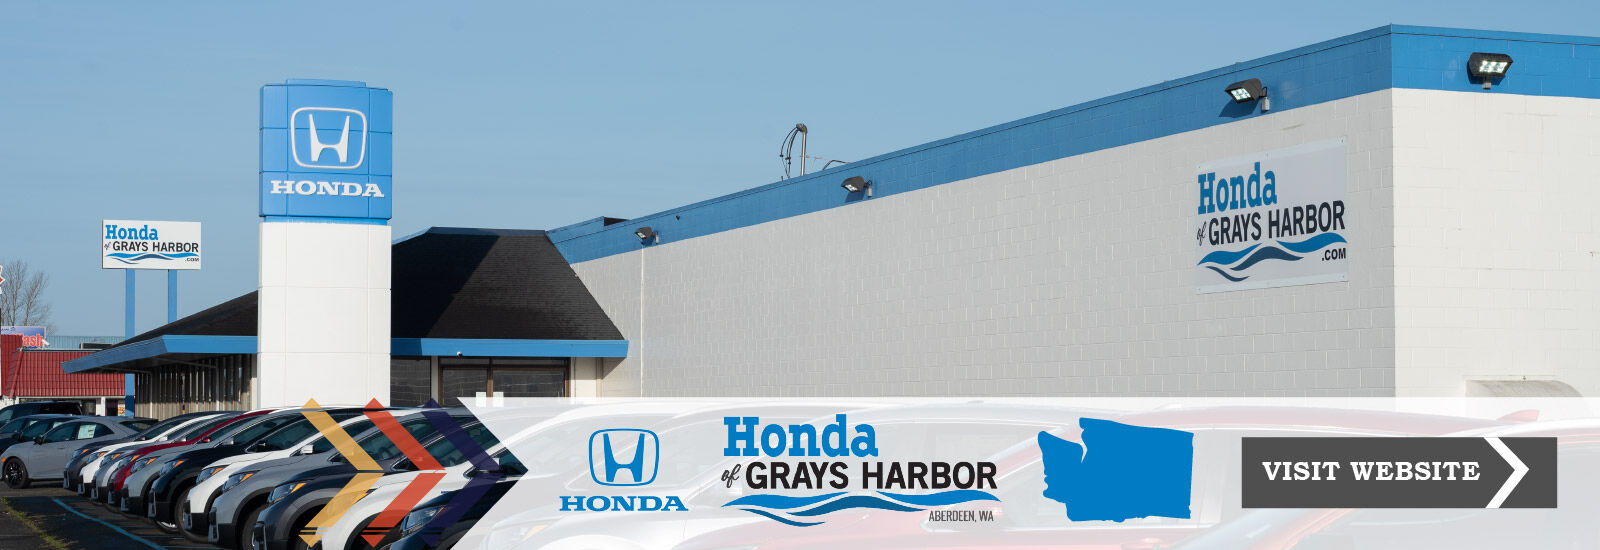 Honda of Grays Harbor